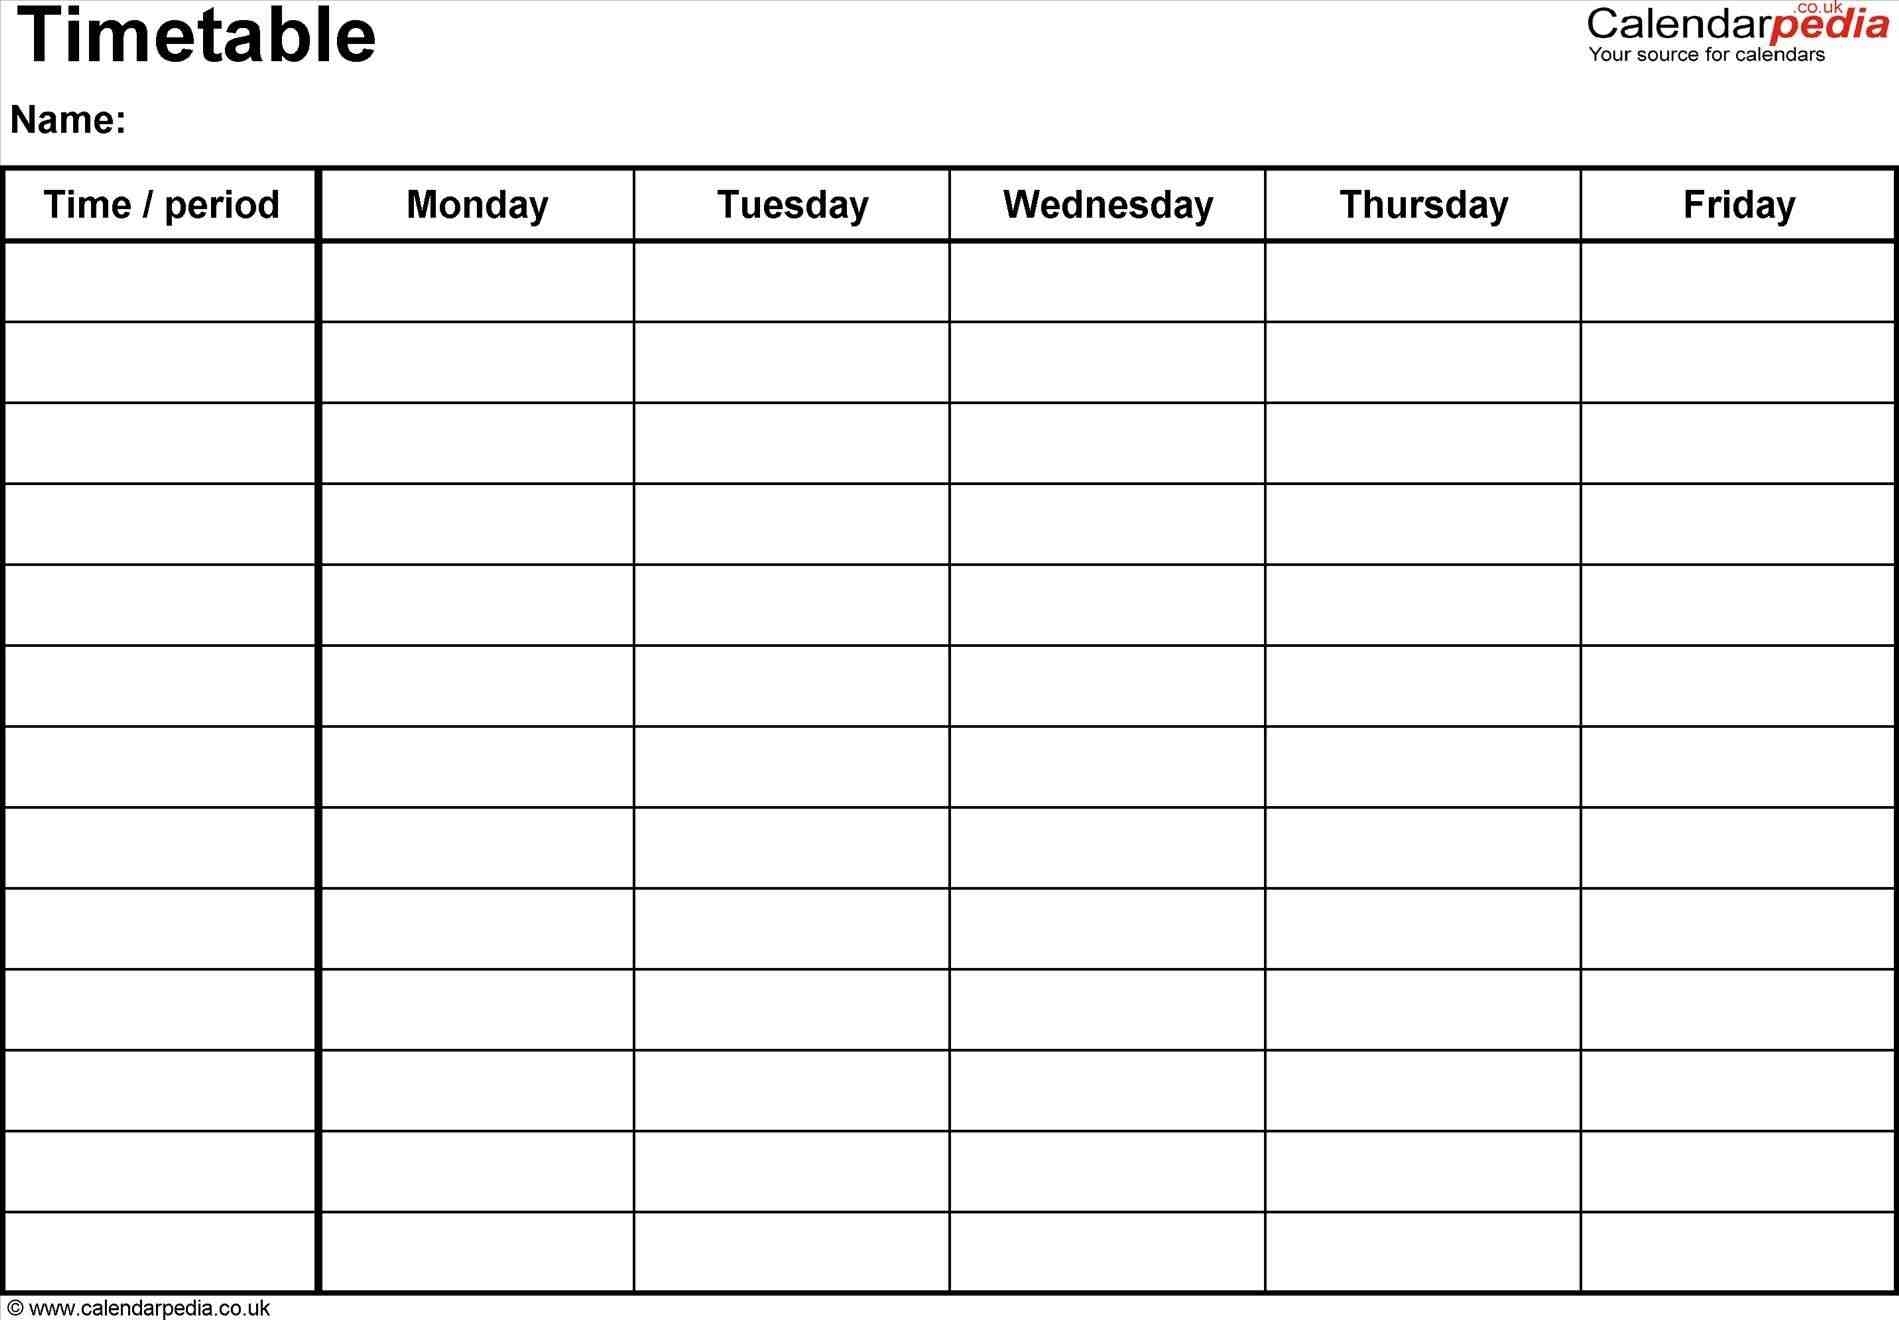 Planner Calendar Insssrenterprisesco Free Weekly Schedule Templates throughout Week Schedule Template With Times